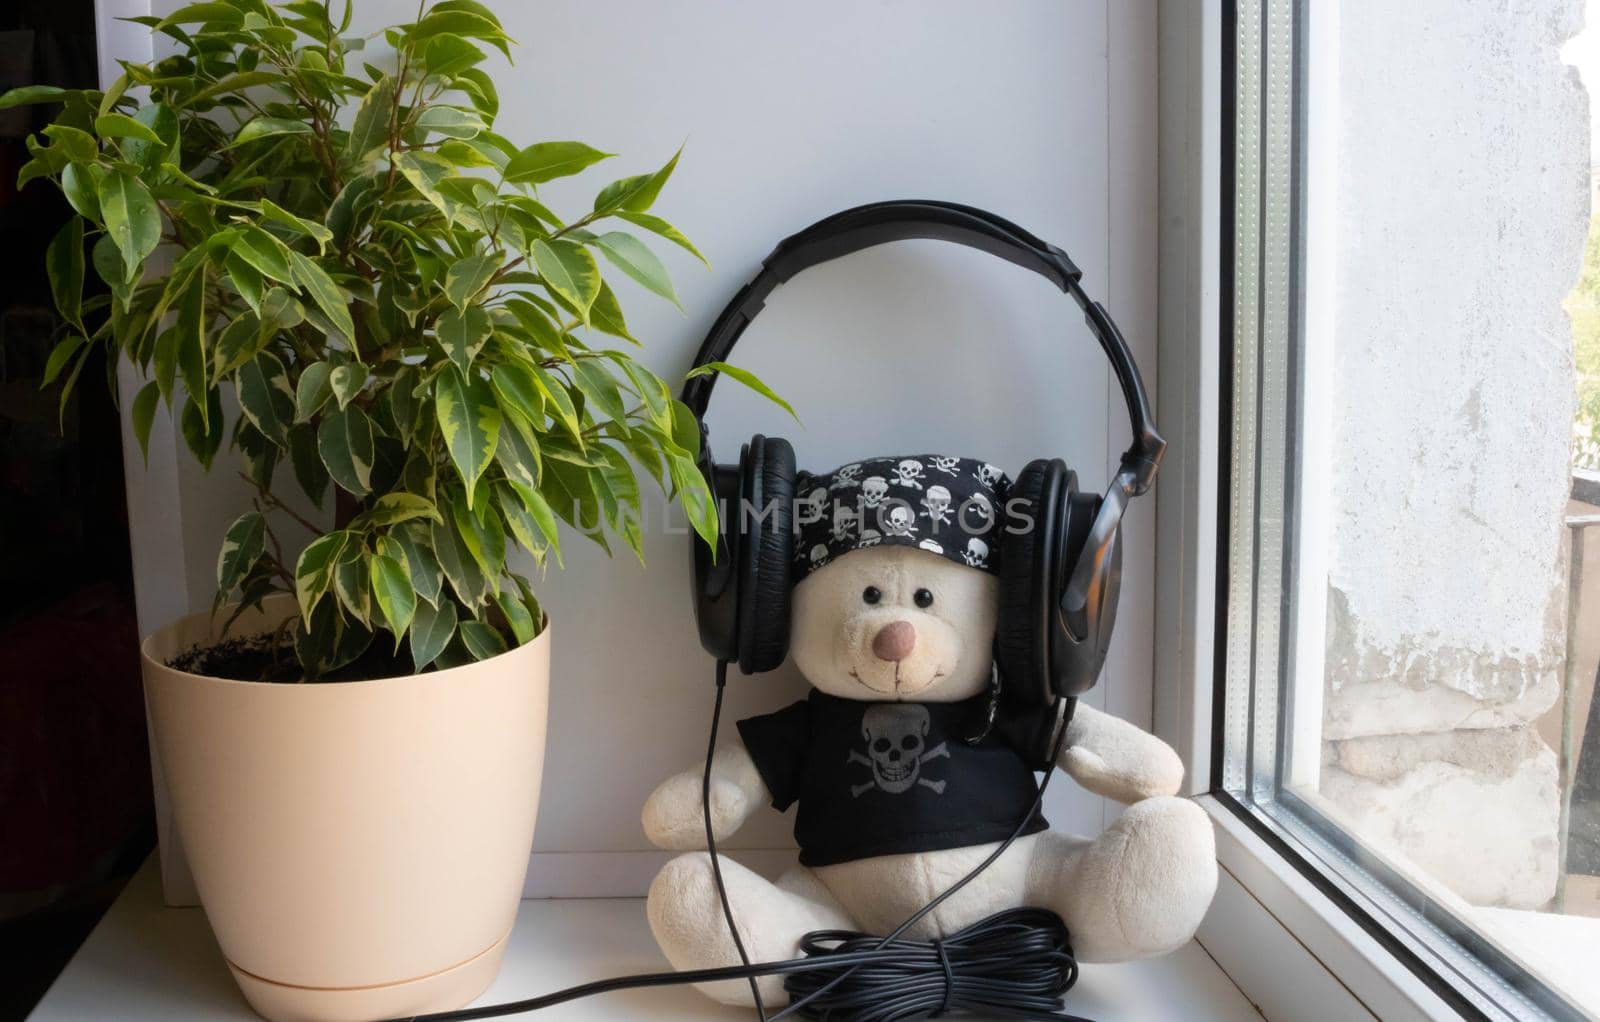 Teddy bear with headphones listening to audio music on the windowsill by lapushka62